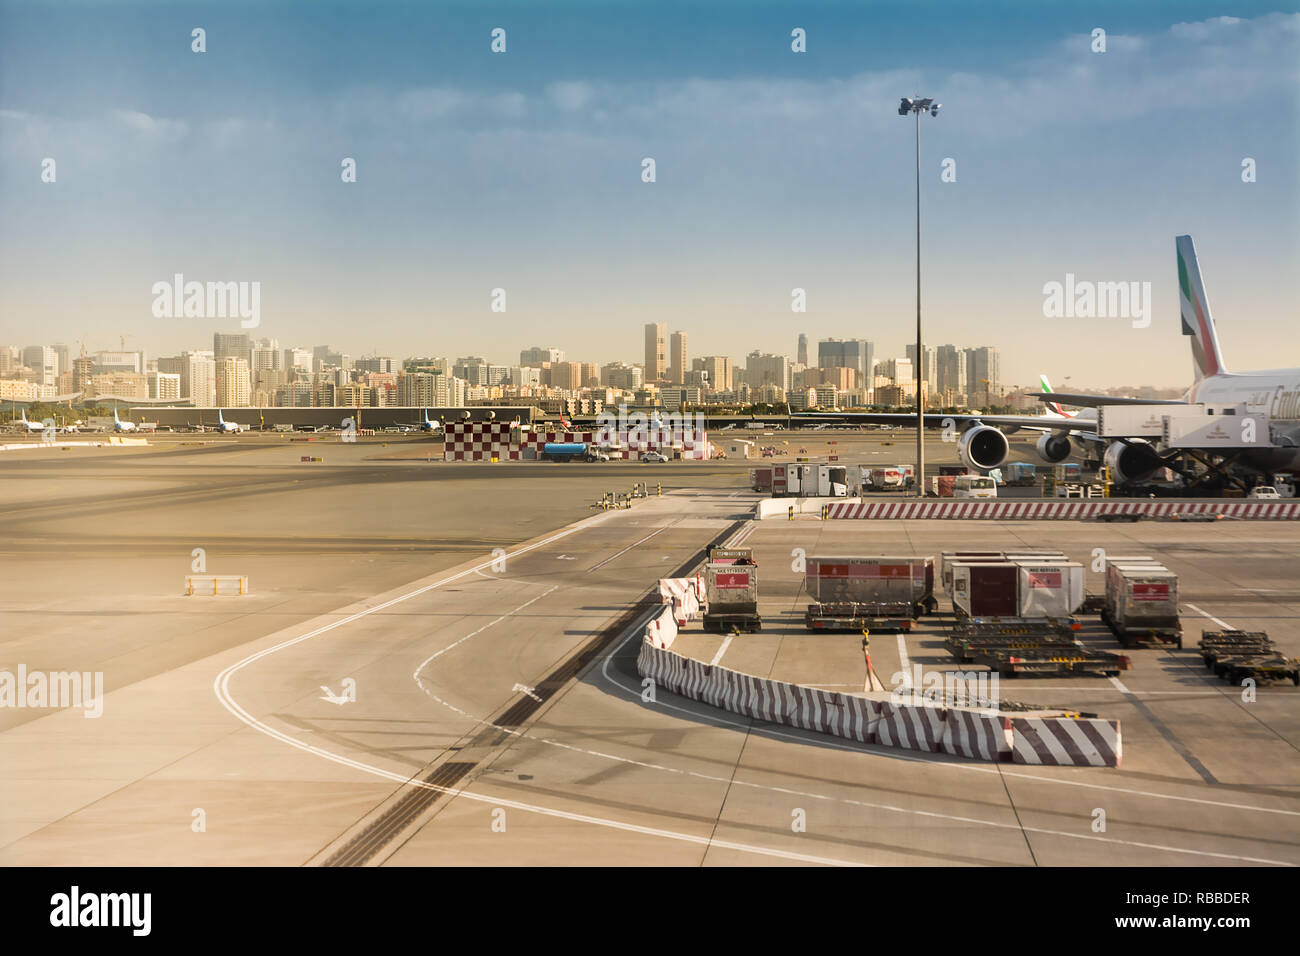 Dubai, UAE - October 31, 2018: View of Dubai's buildings from the international Dubai airport runways Stock Photo